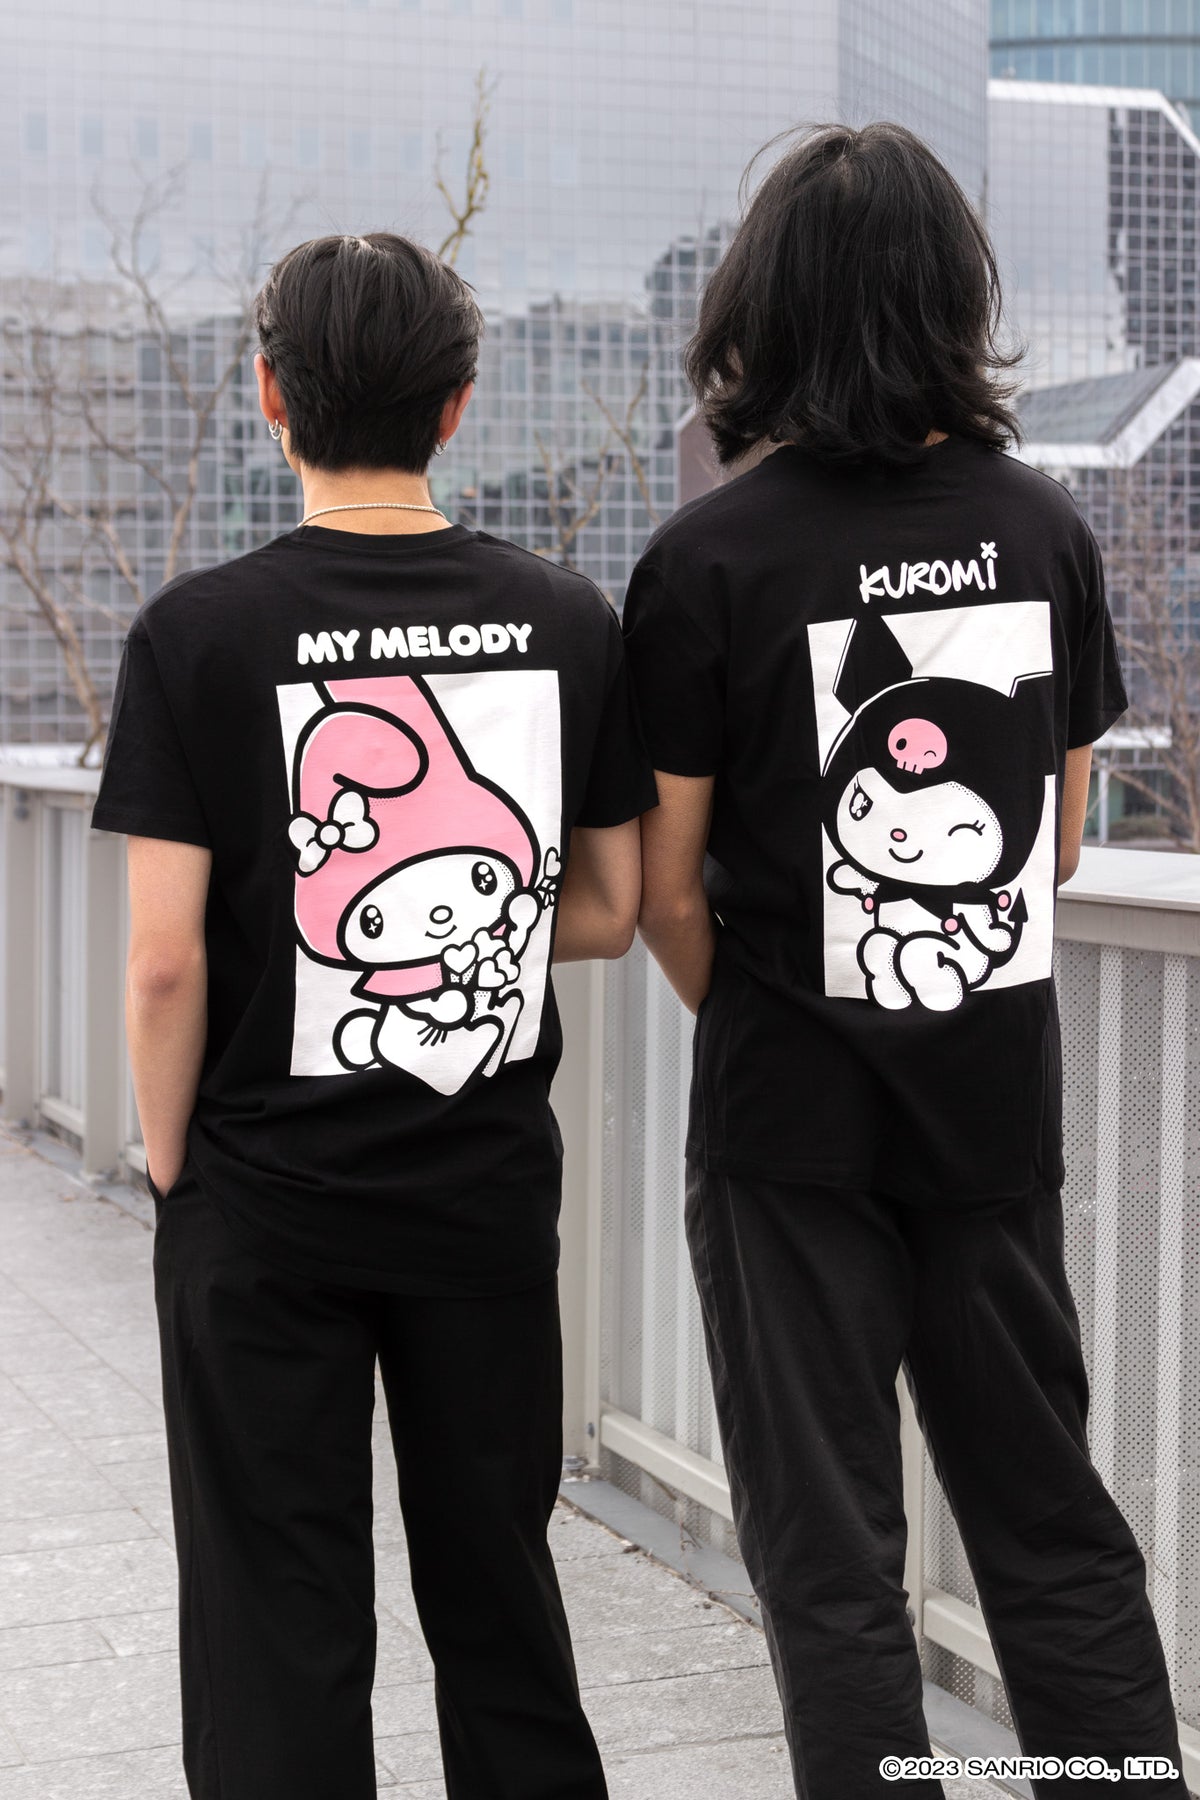 Create meme kuromi t-shirt for roblox, t shirt for roblox, t shirt roblox  for girls black - Pictures 